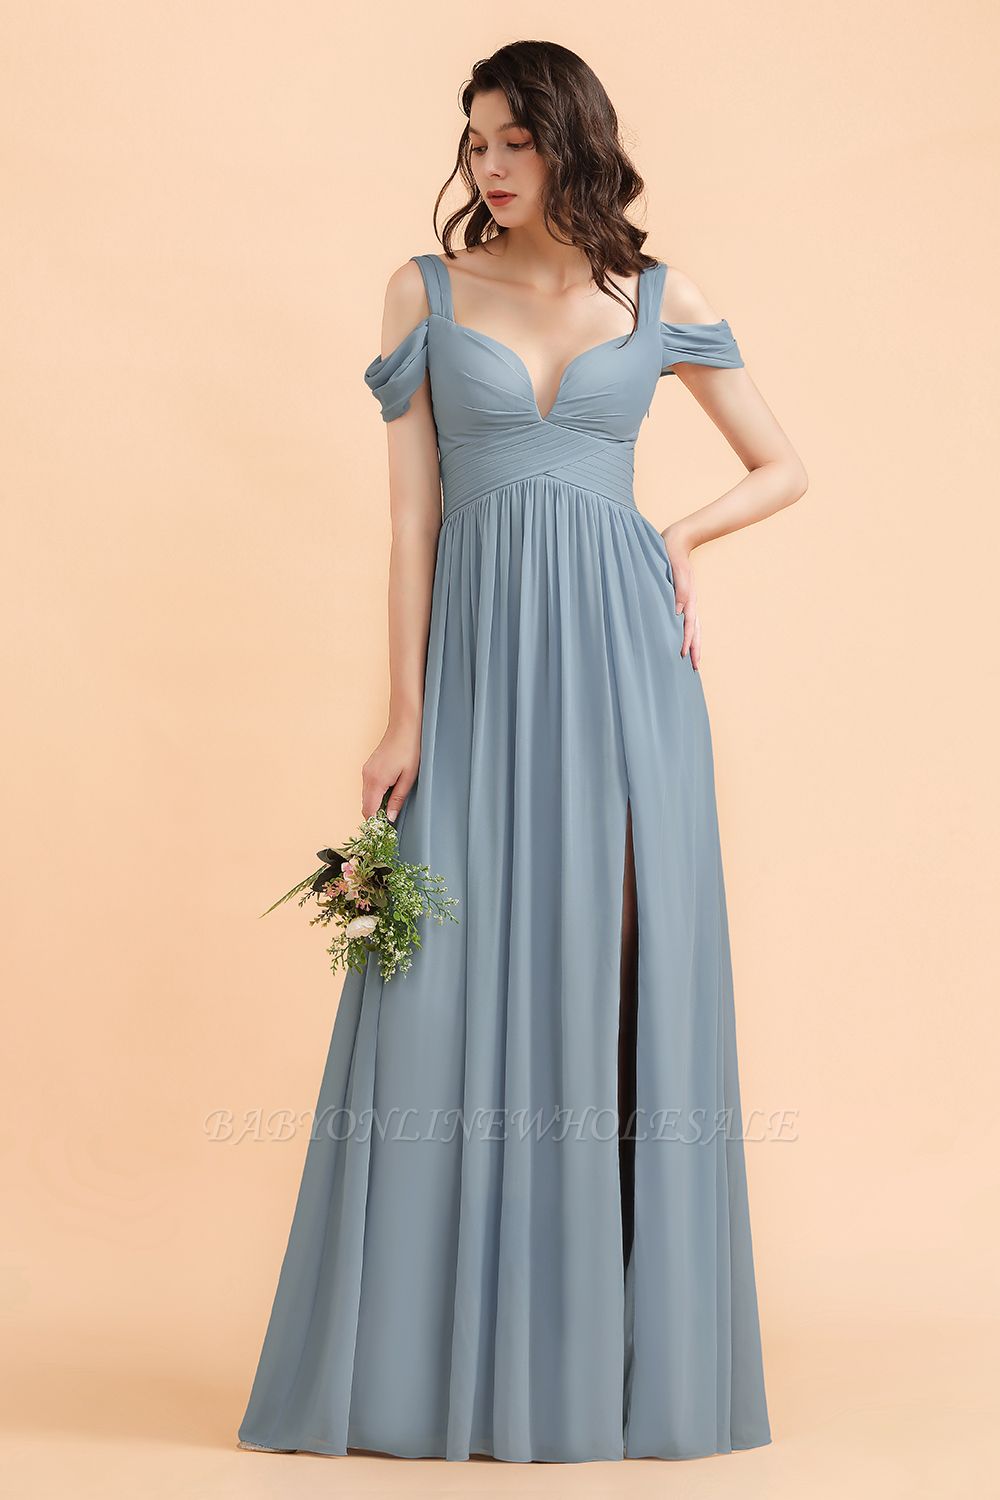 Grey Blue Off Shoulder Chiffon Bridesmaid Dress with Side Slit Straps Wedding Party Dress